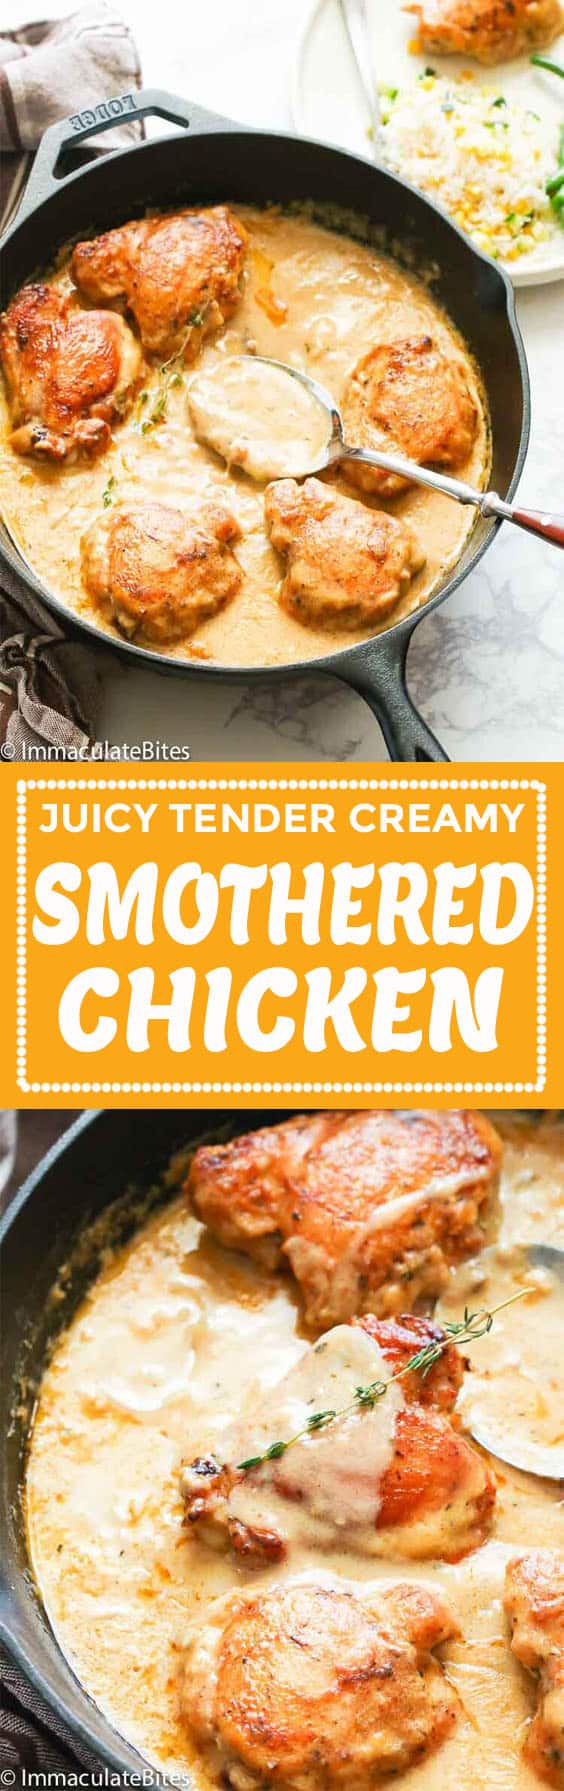 Smothered Chicken